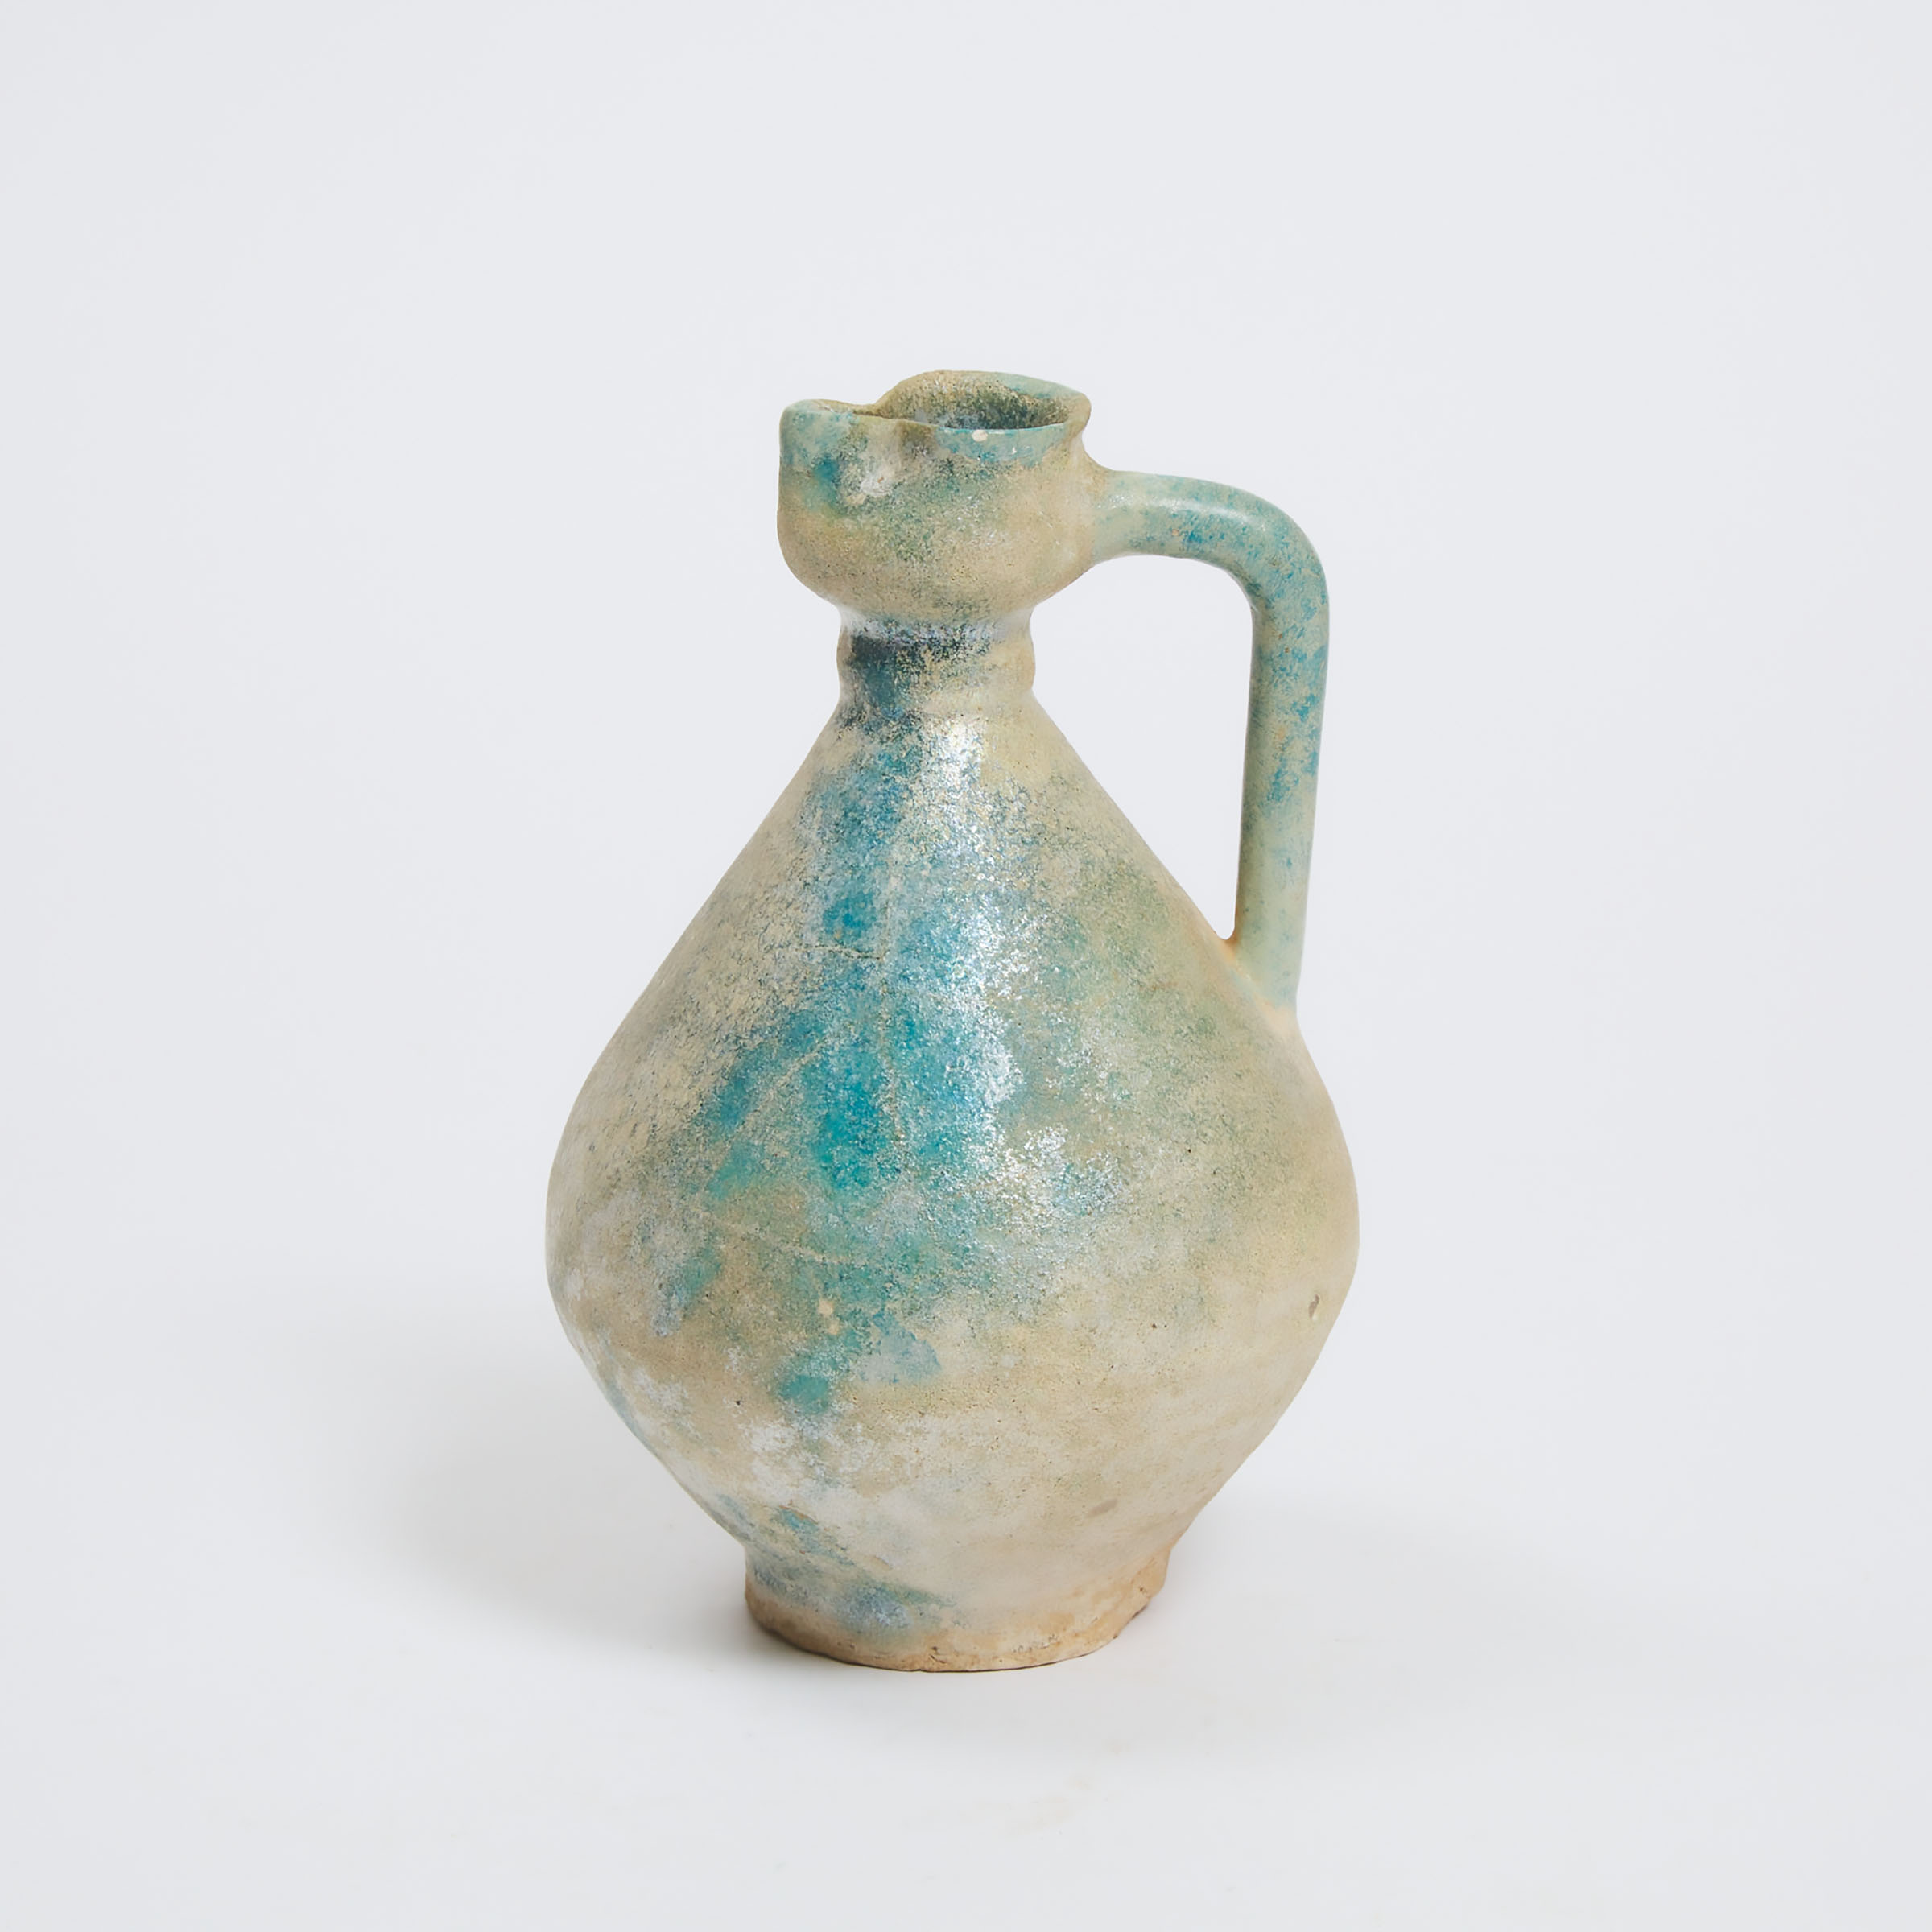 A Nishapur Turquoise-Glazed Pottery